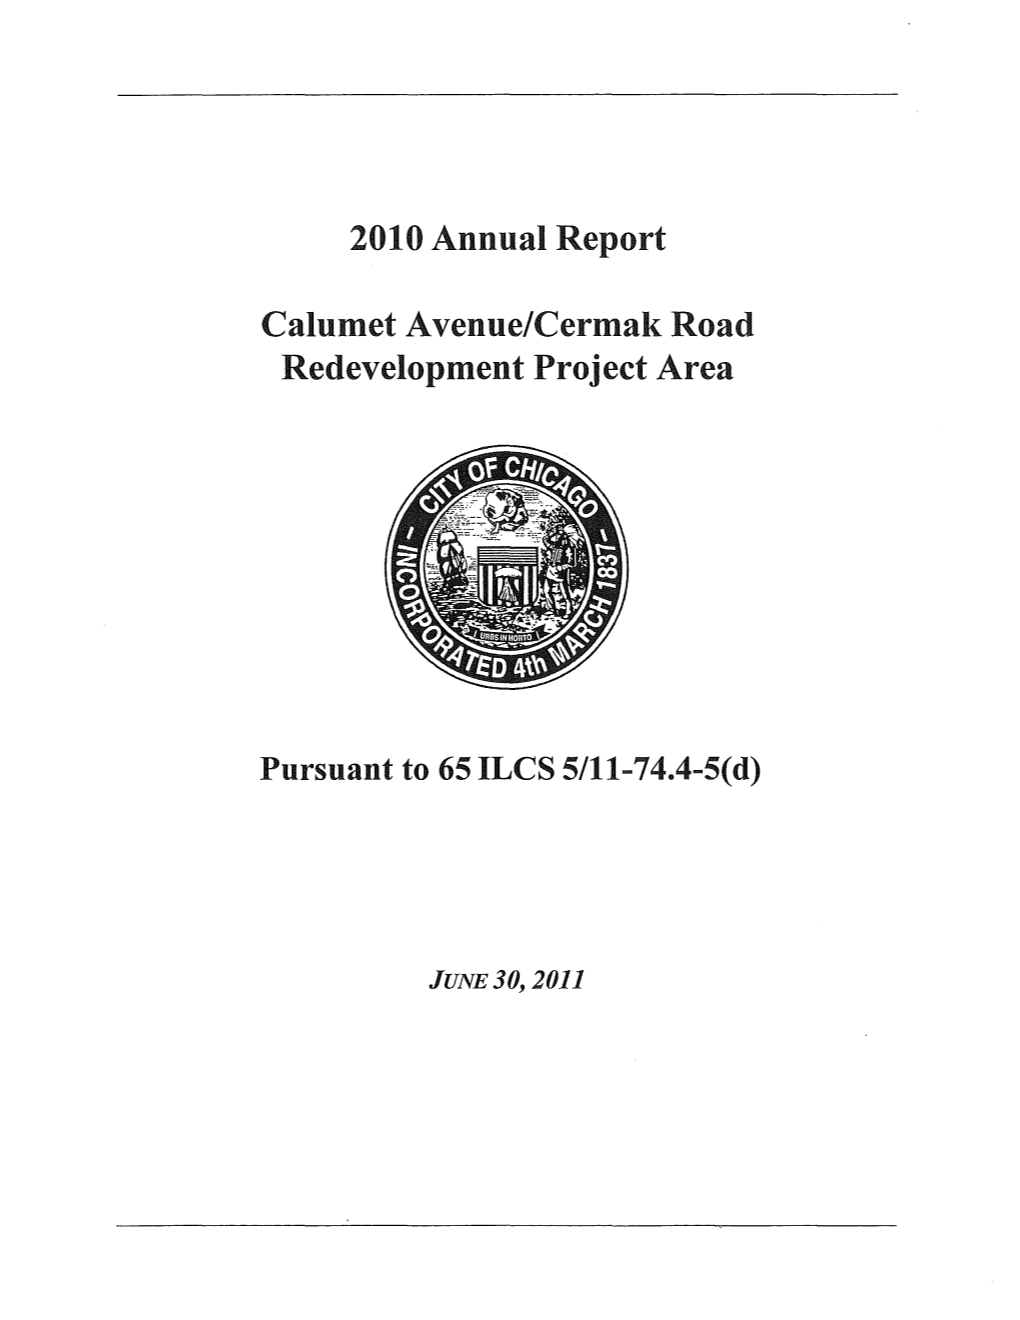 2010 Annual Report Calumet Avenue/Cermak Road Redevelopment Project Area